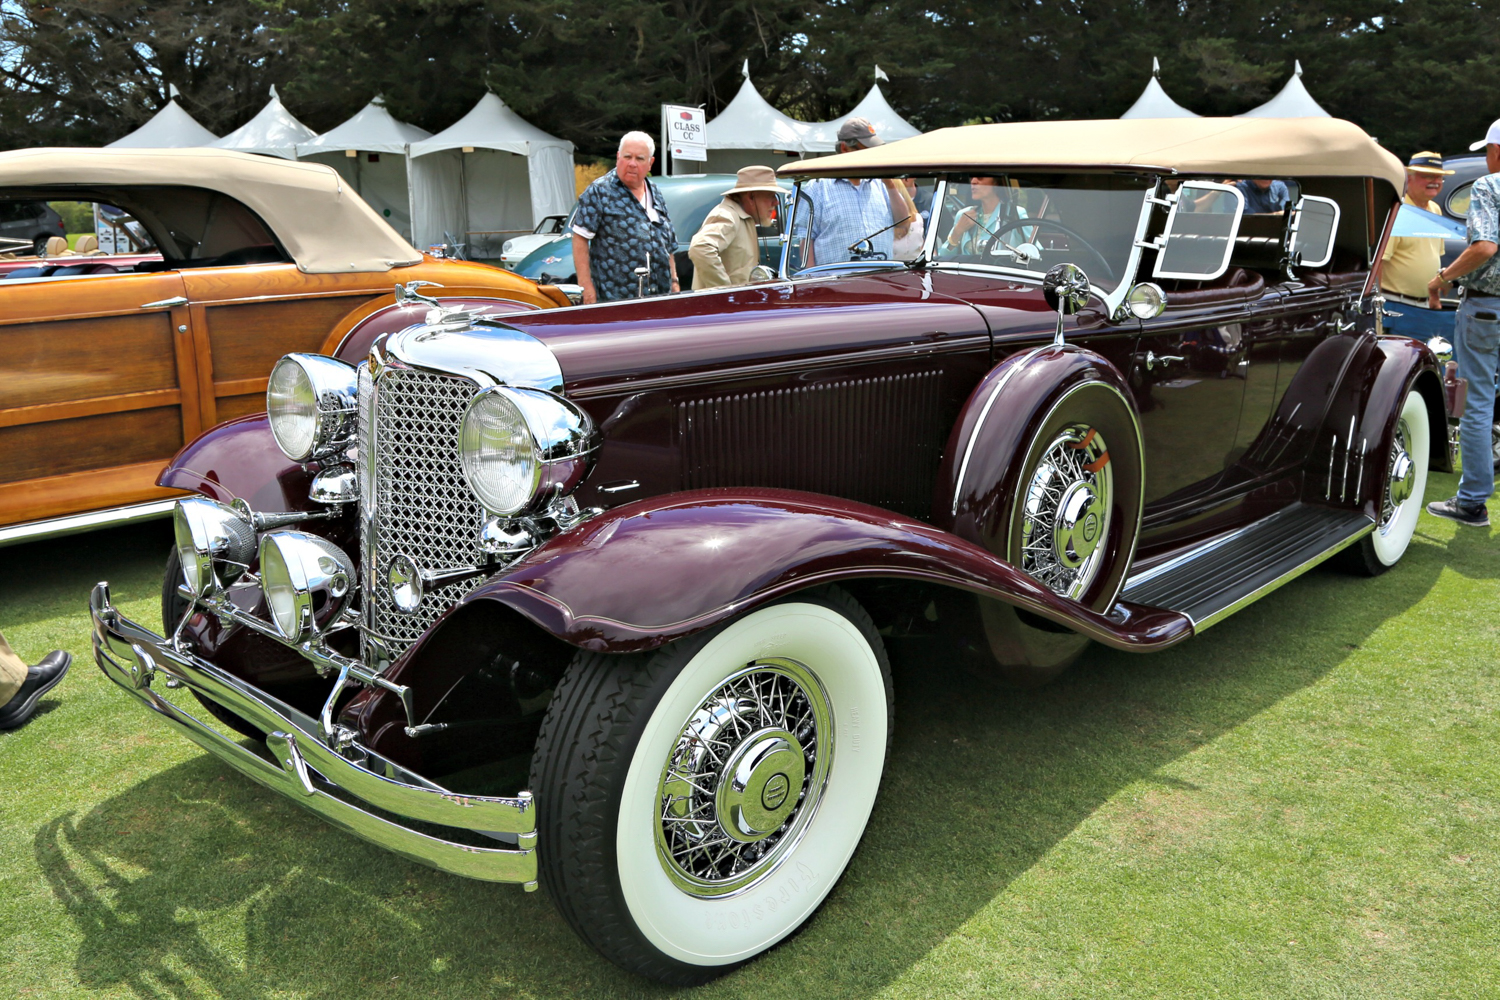 1931 Chrysler CG Imperial. Aaron & Valerie Weiss